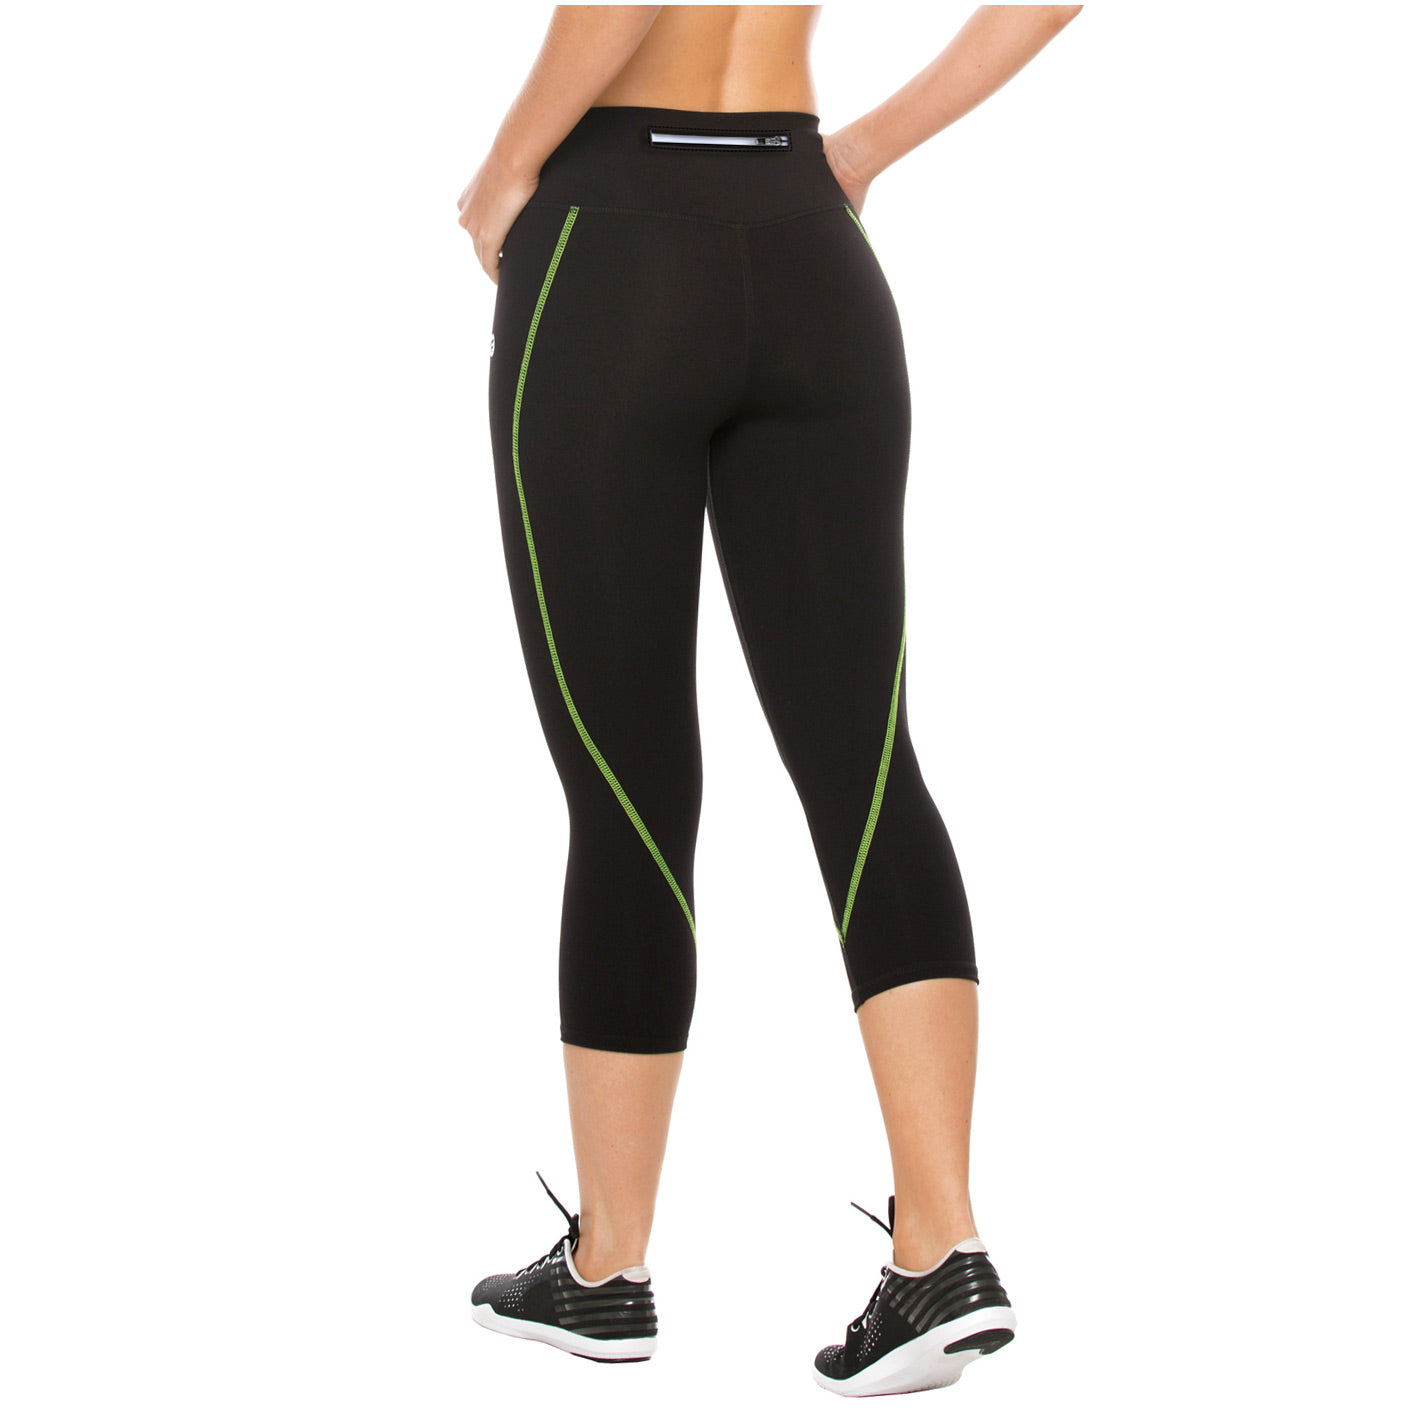 Buy Aenlley Women's Activewear Capri Legging Workout Gym Spanx